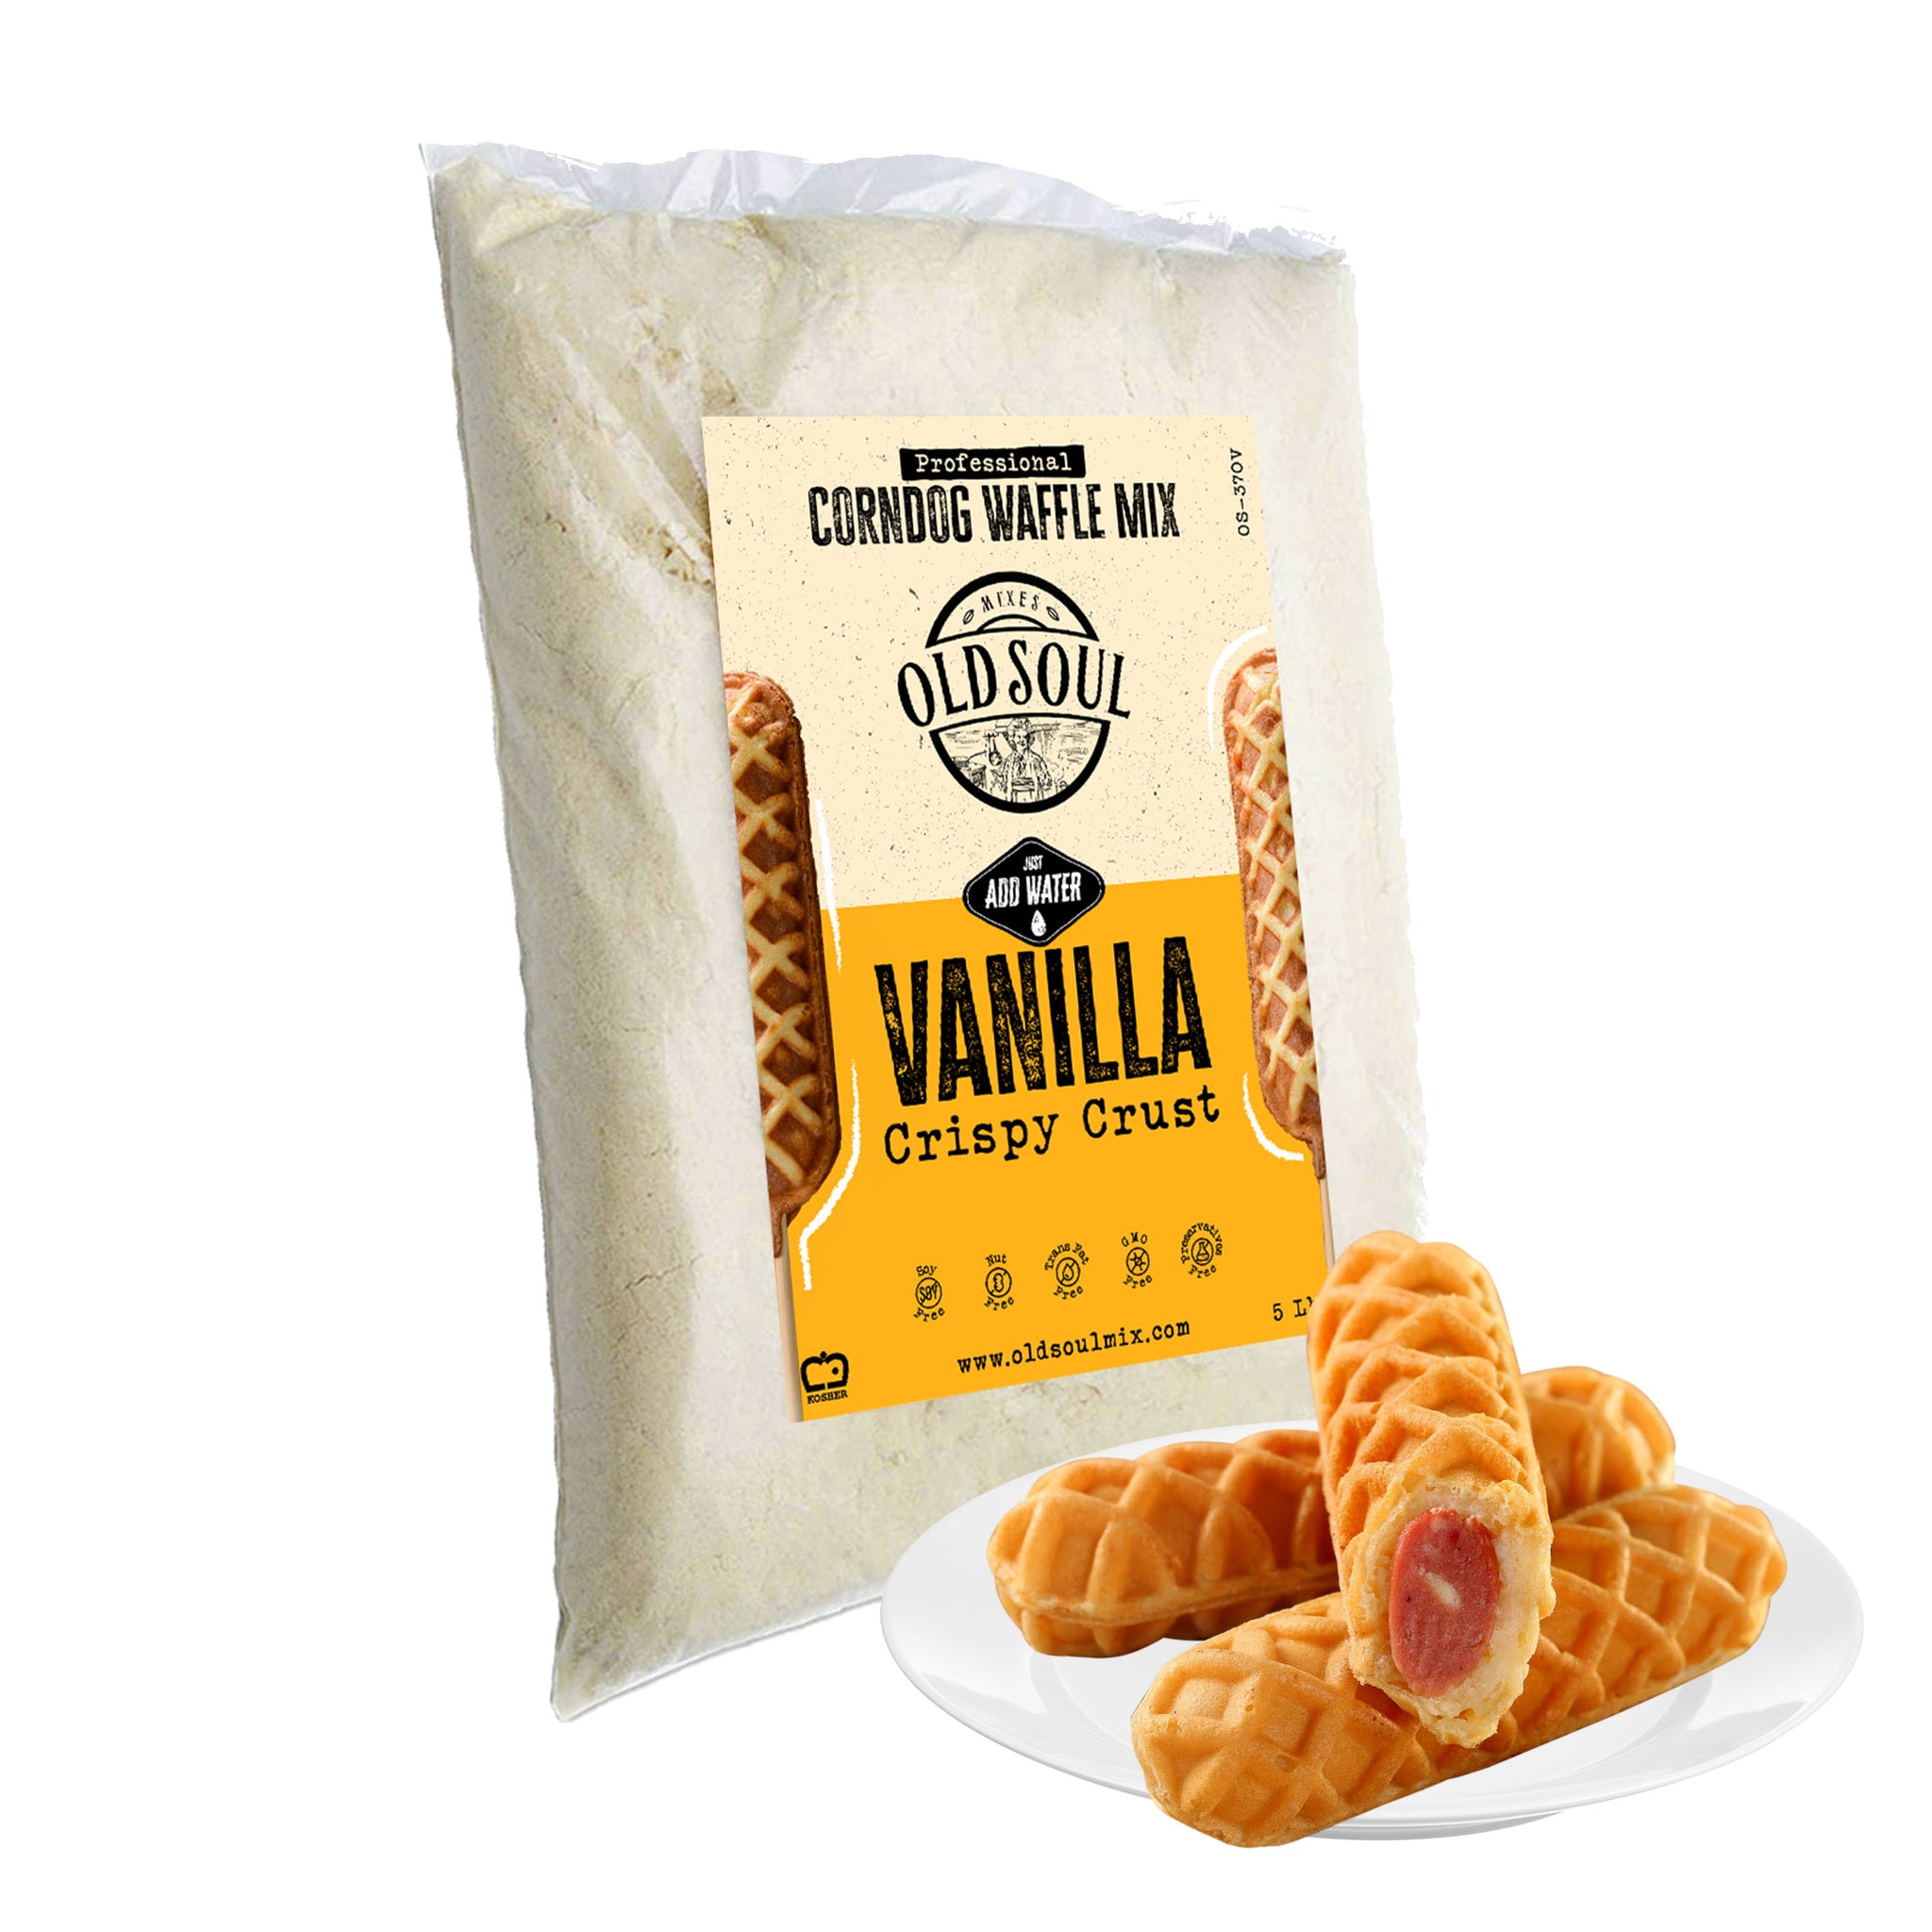 OldSoul Professional Corndog Waffle Batter Mix | Crispy | Vanilla Flavor | Dough Mix for HotDog Waffles